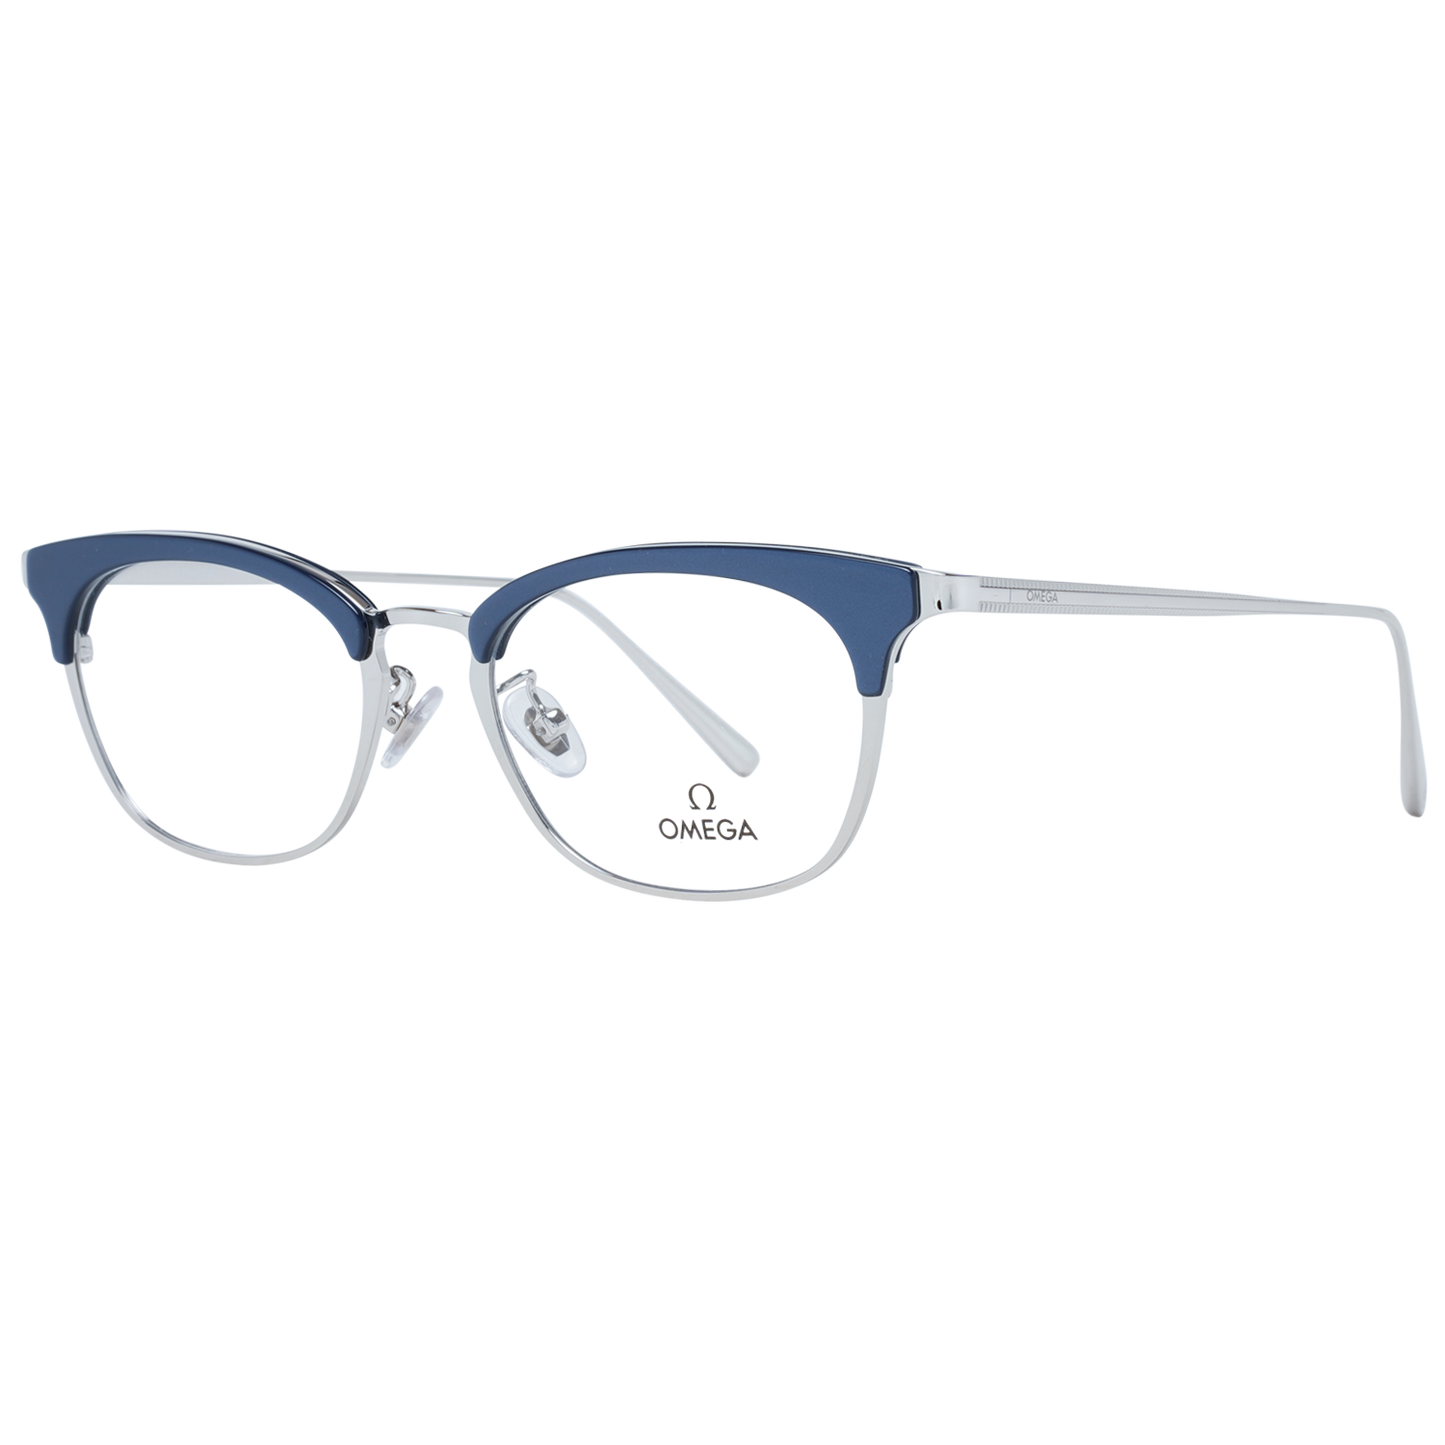 Omega Blue Women Optical Frames - DEA STILOSA MILANO